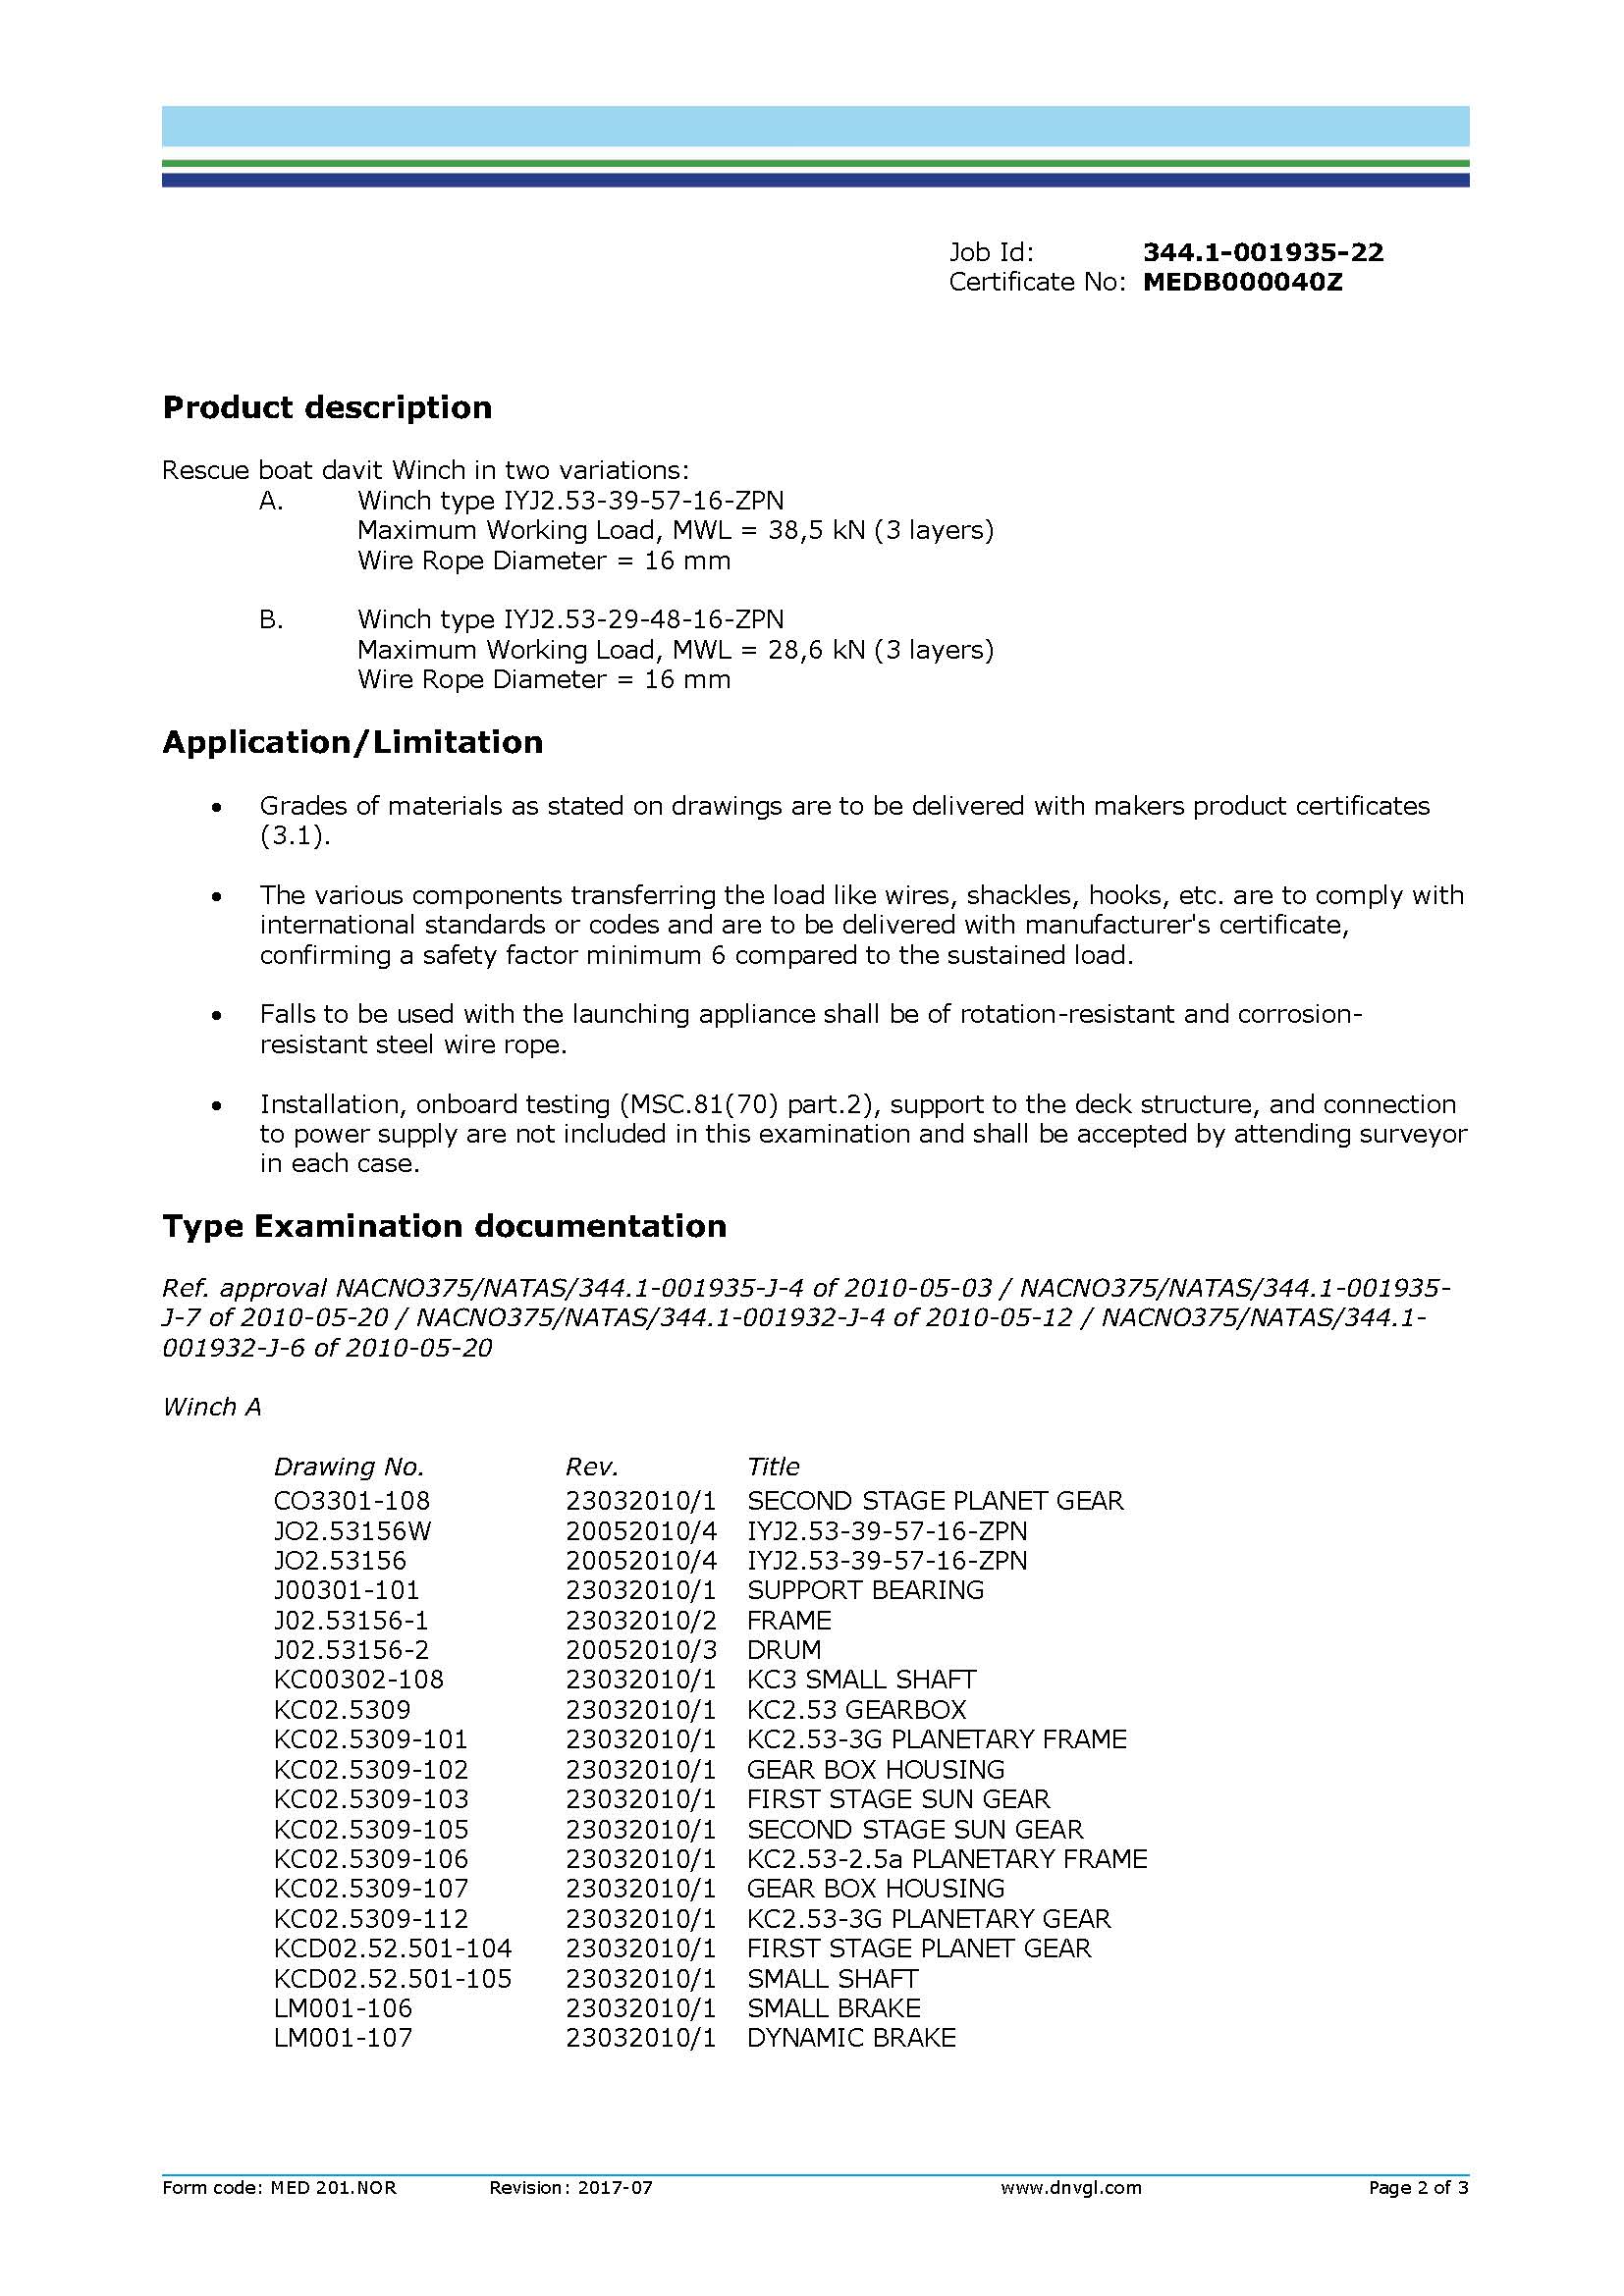 IYJ 2.53 Hydraulic Winch EC Type Certificate,2018_Page_2